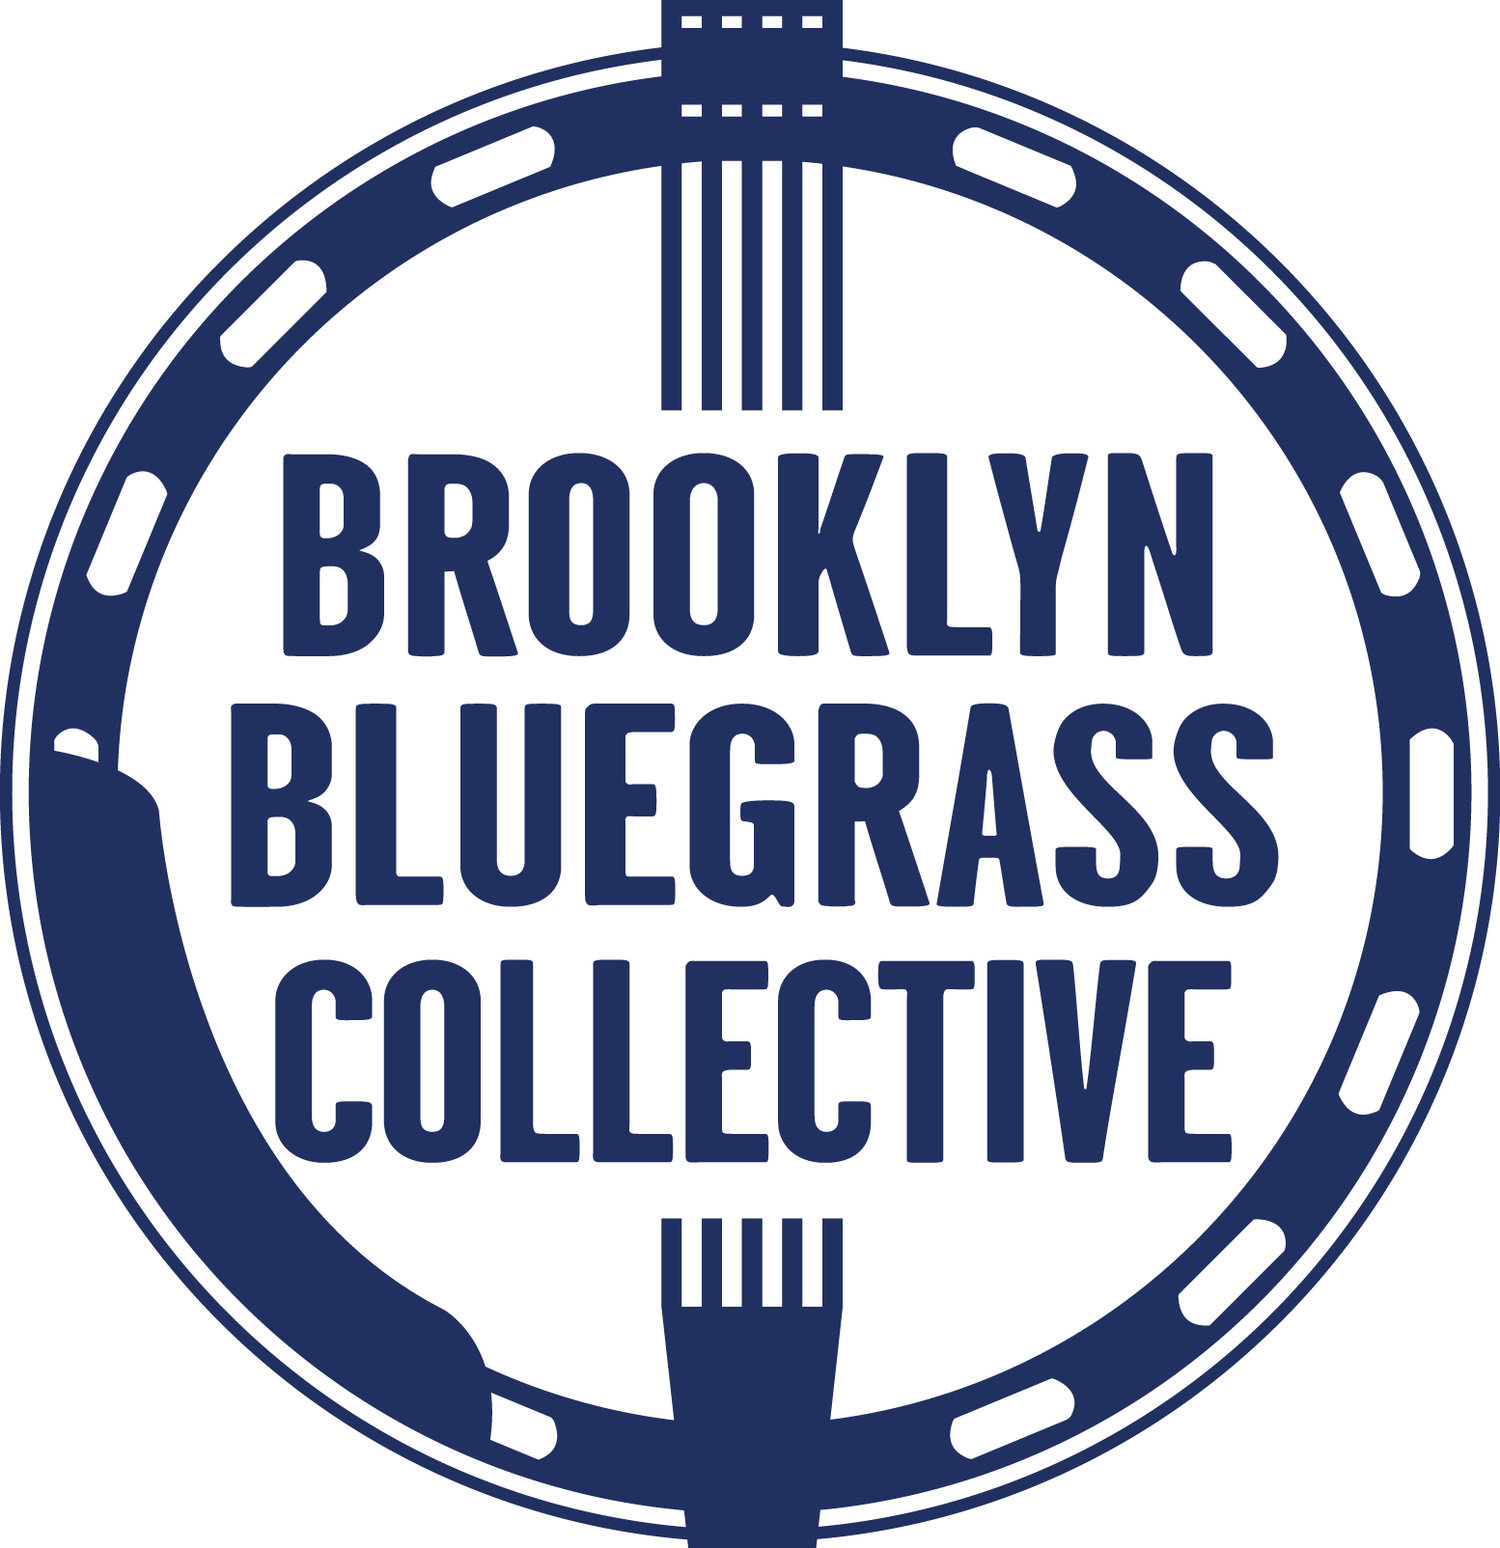 Brooklyn Bluegrass Collective